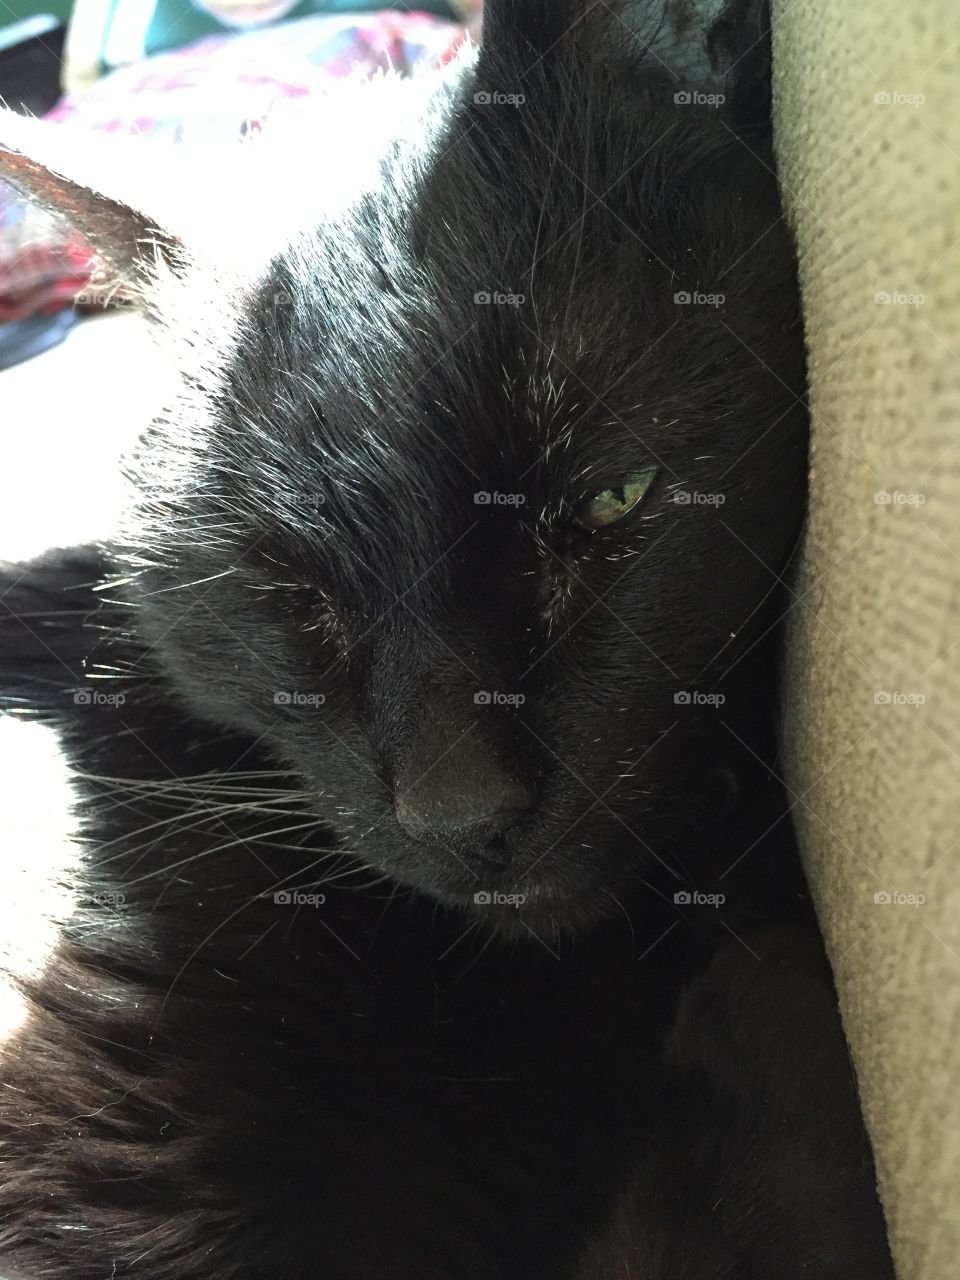 A Black Cat in the Sunshine 